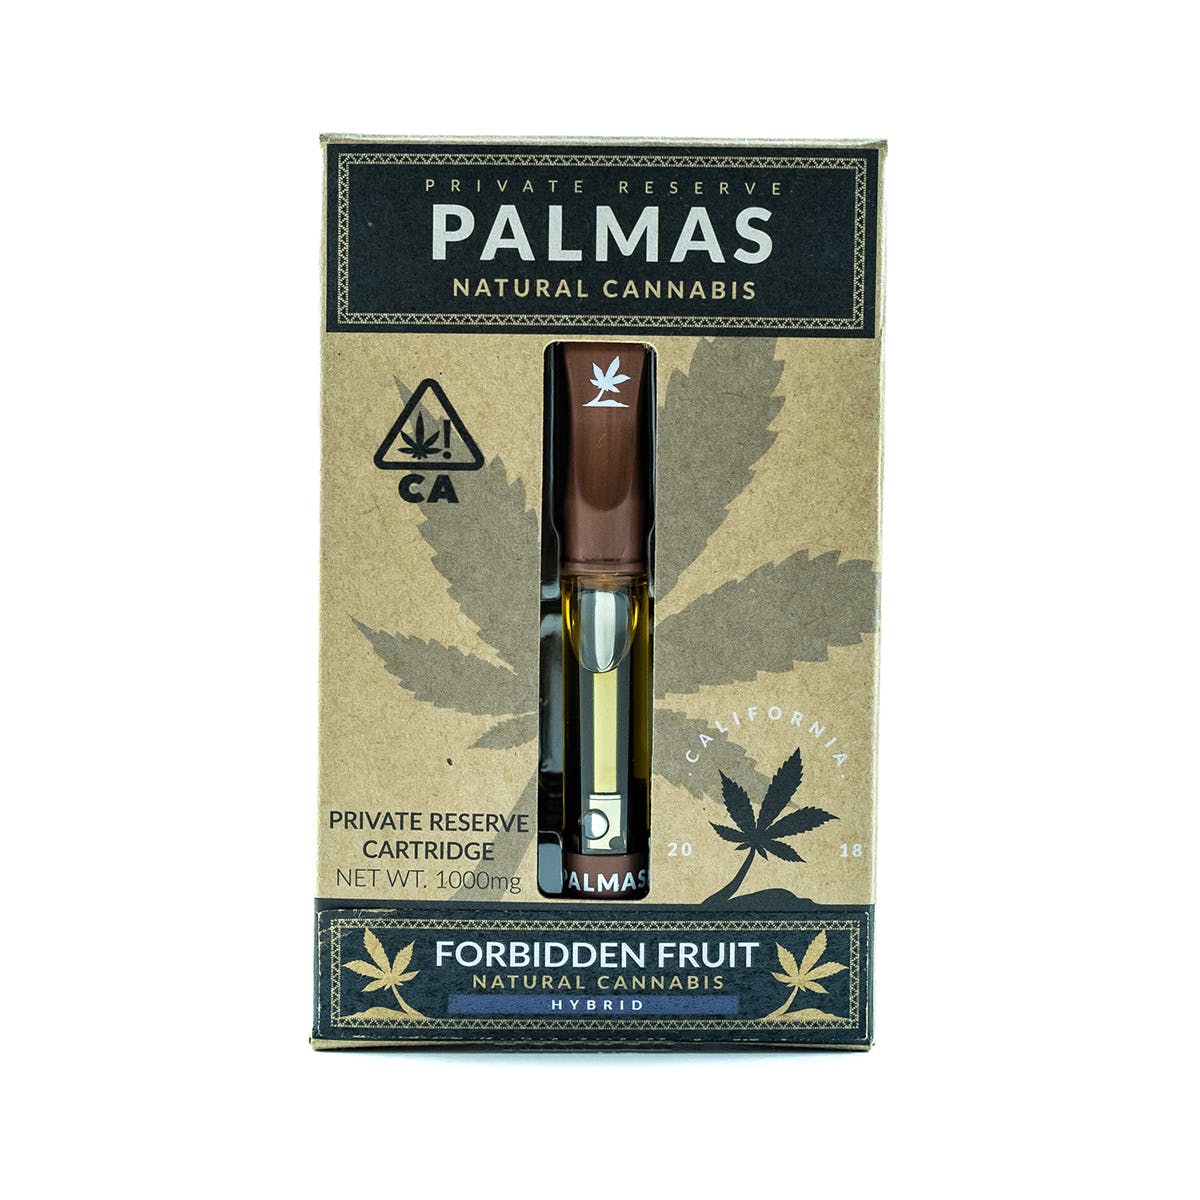 marijuana-dispensaries-pomonas-finest-20-in-pomona-palmas-private-reserve-cartridge-forbidden-fruit